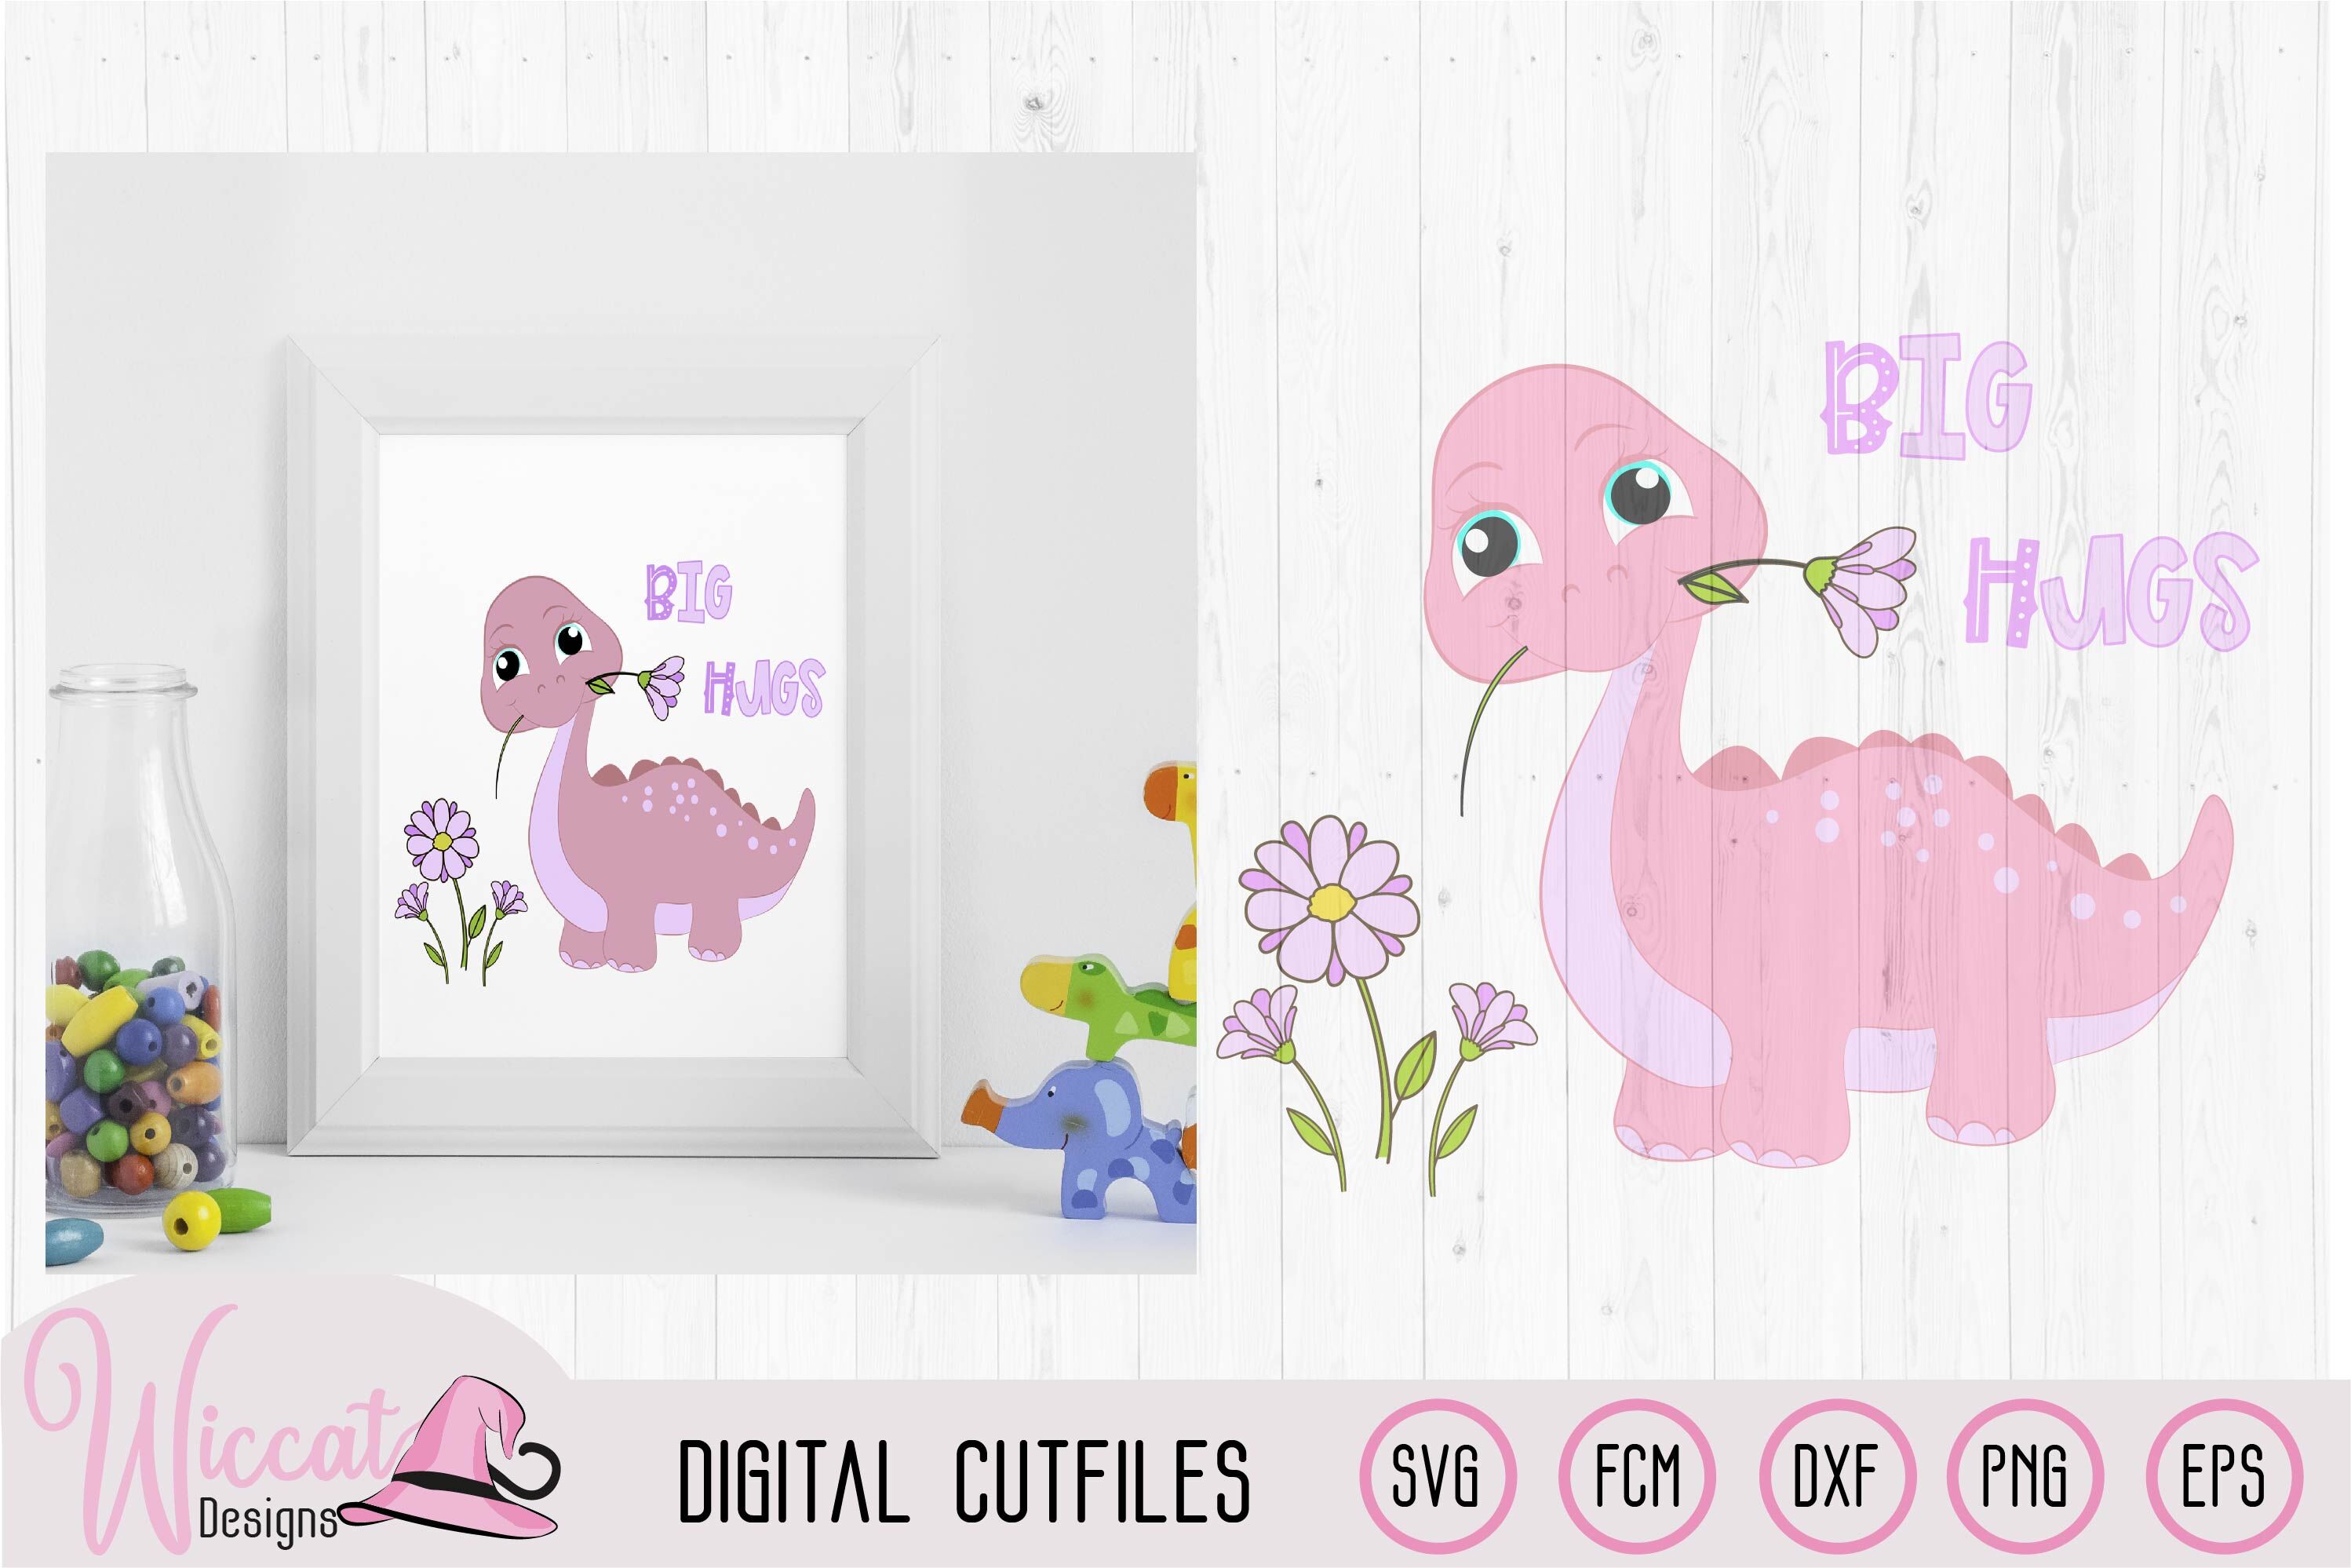 Download Girl Baby Dino Pink Dinosaur Svg By Wiccatdesigns Thehungryjpeg Com